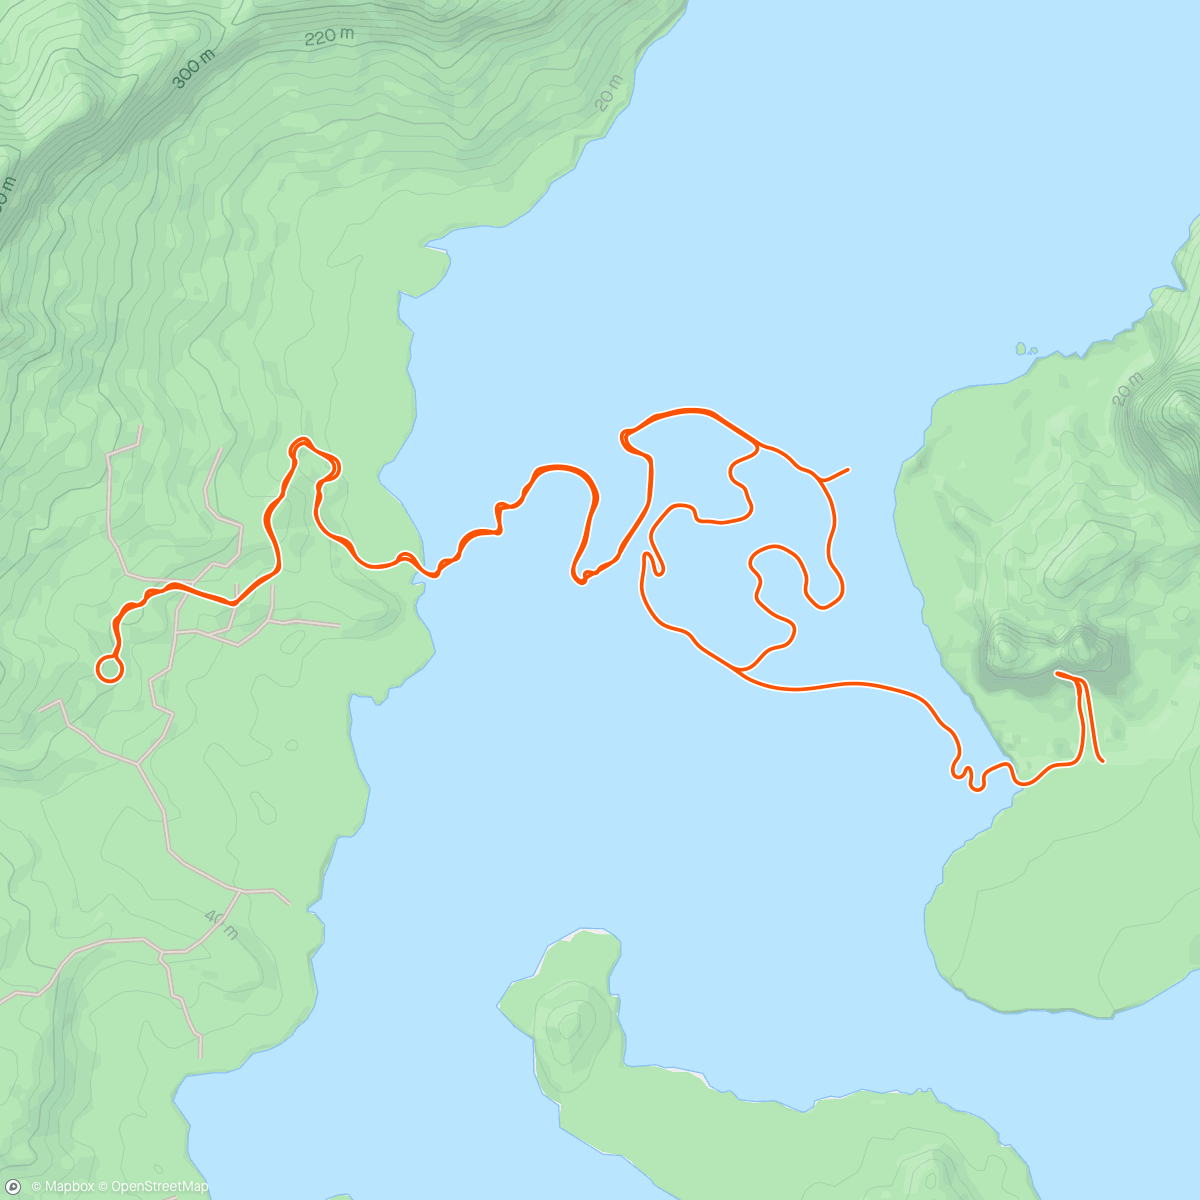 「Zwift - Climb Portal: Old La Honda at 100% Elevation in Watopia」活動的地圖